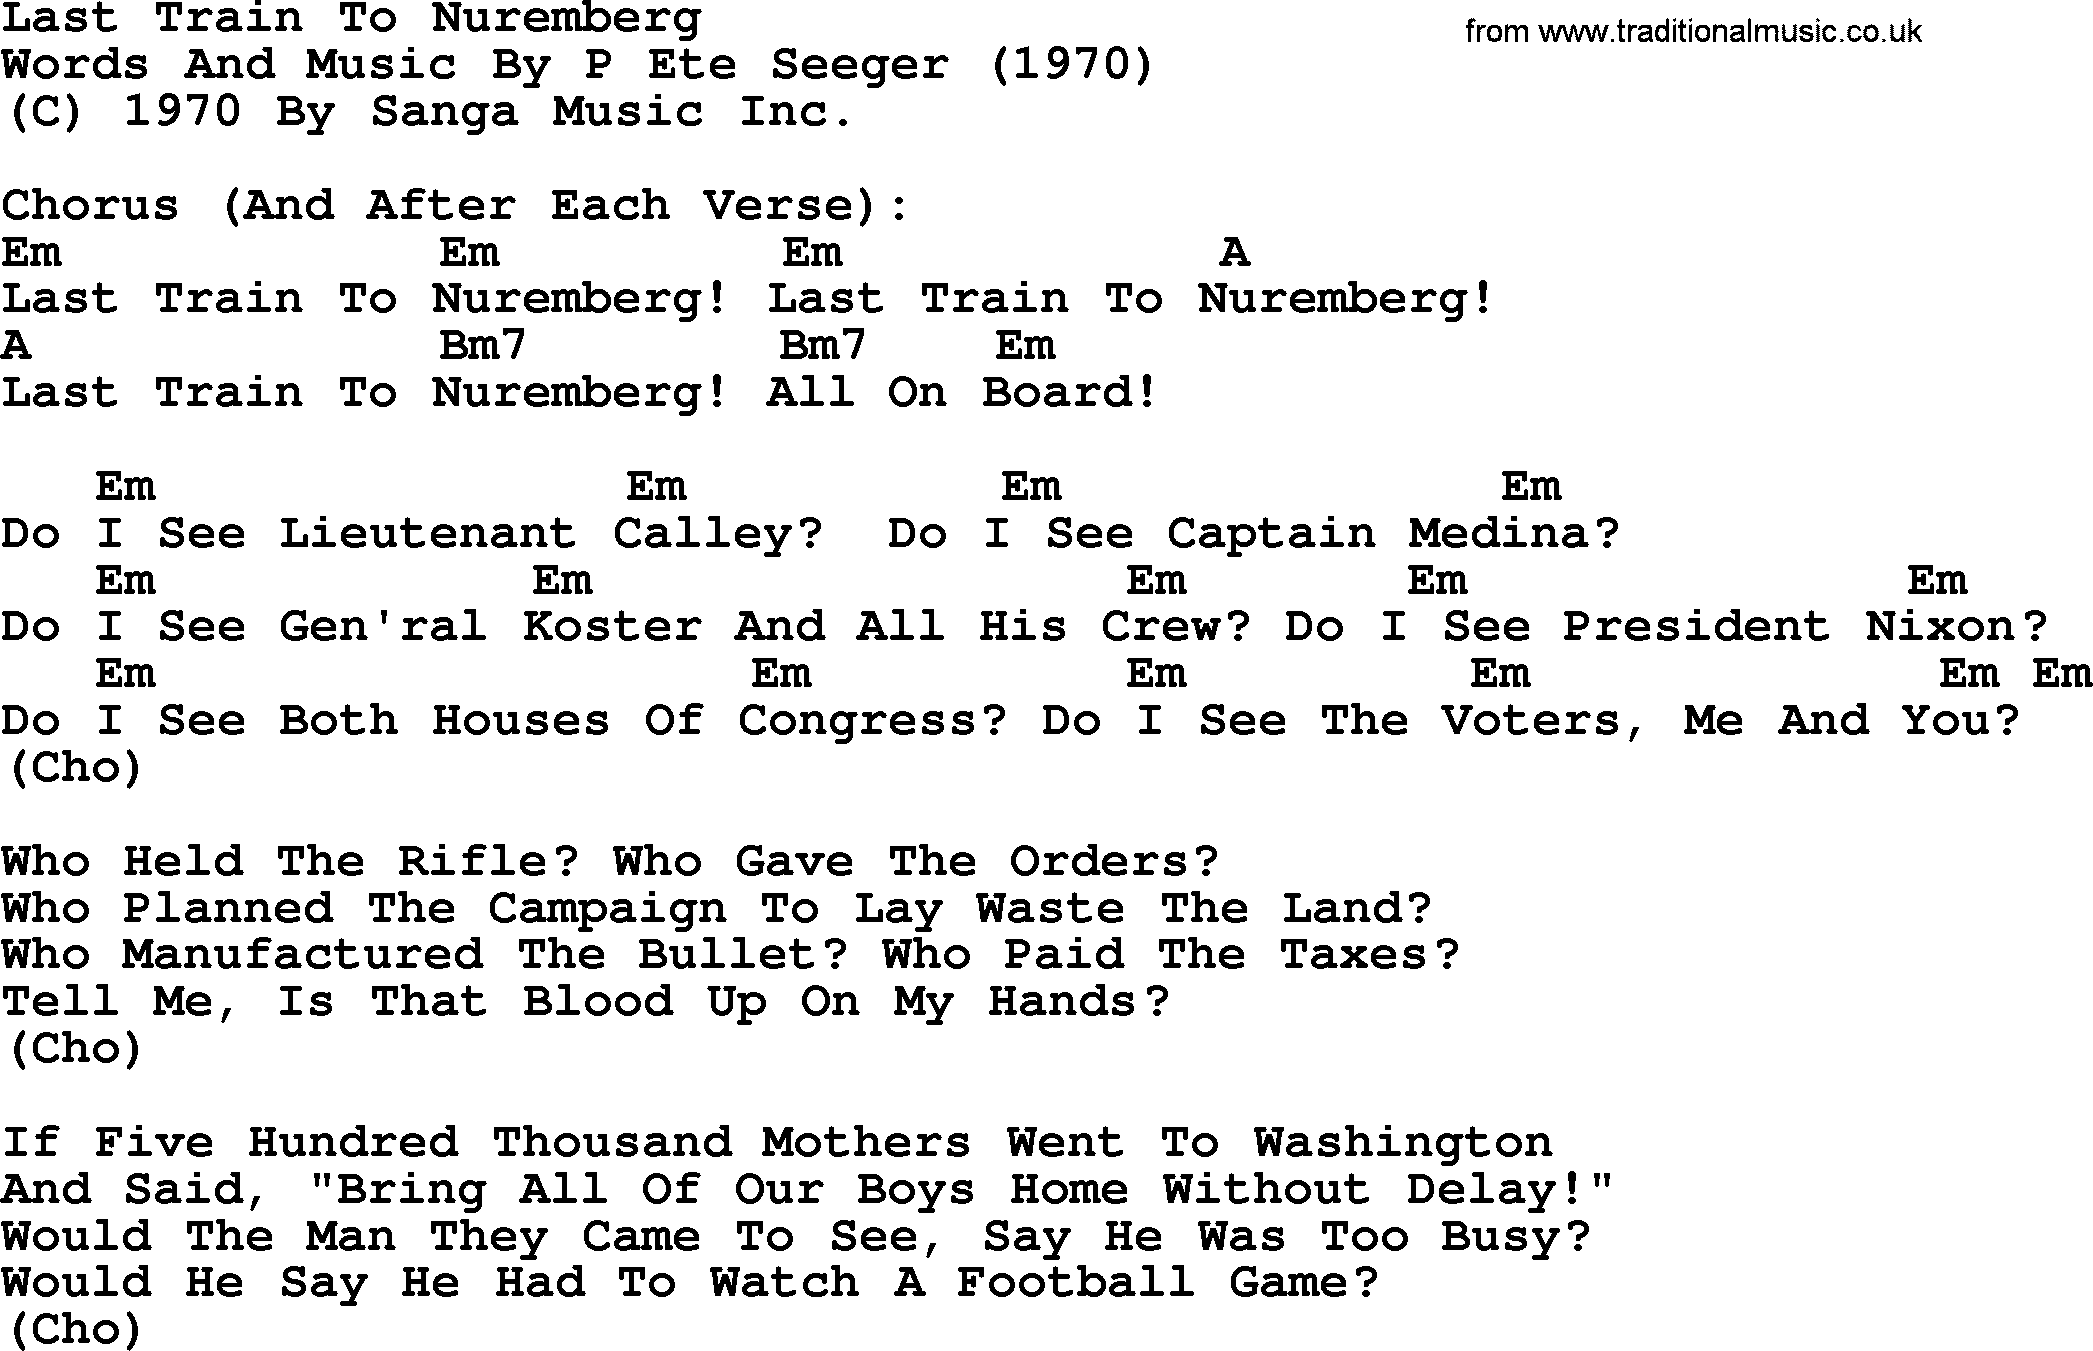 Pete Seeger song Last Train To Nuremberg, lyrics and chords